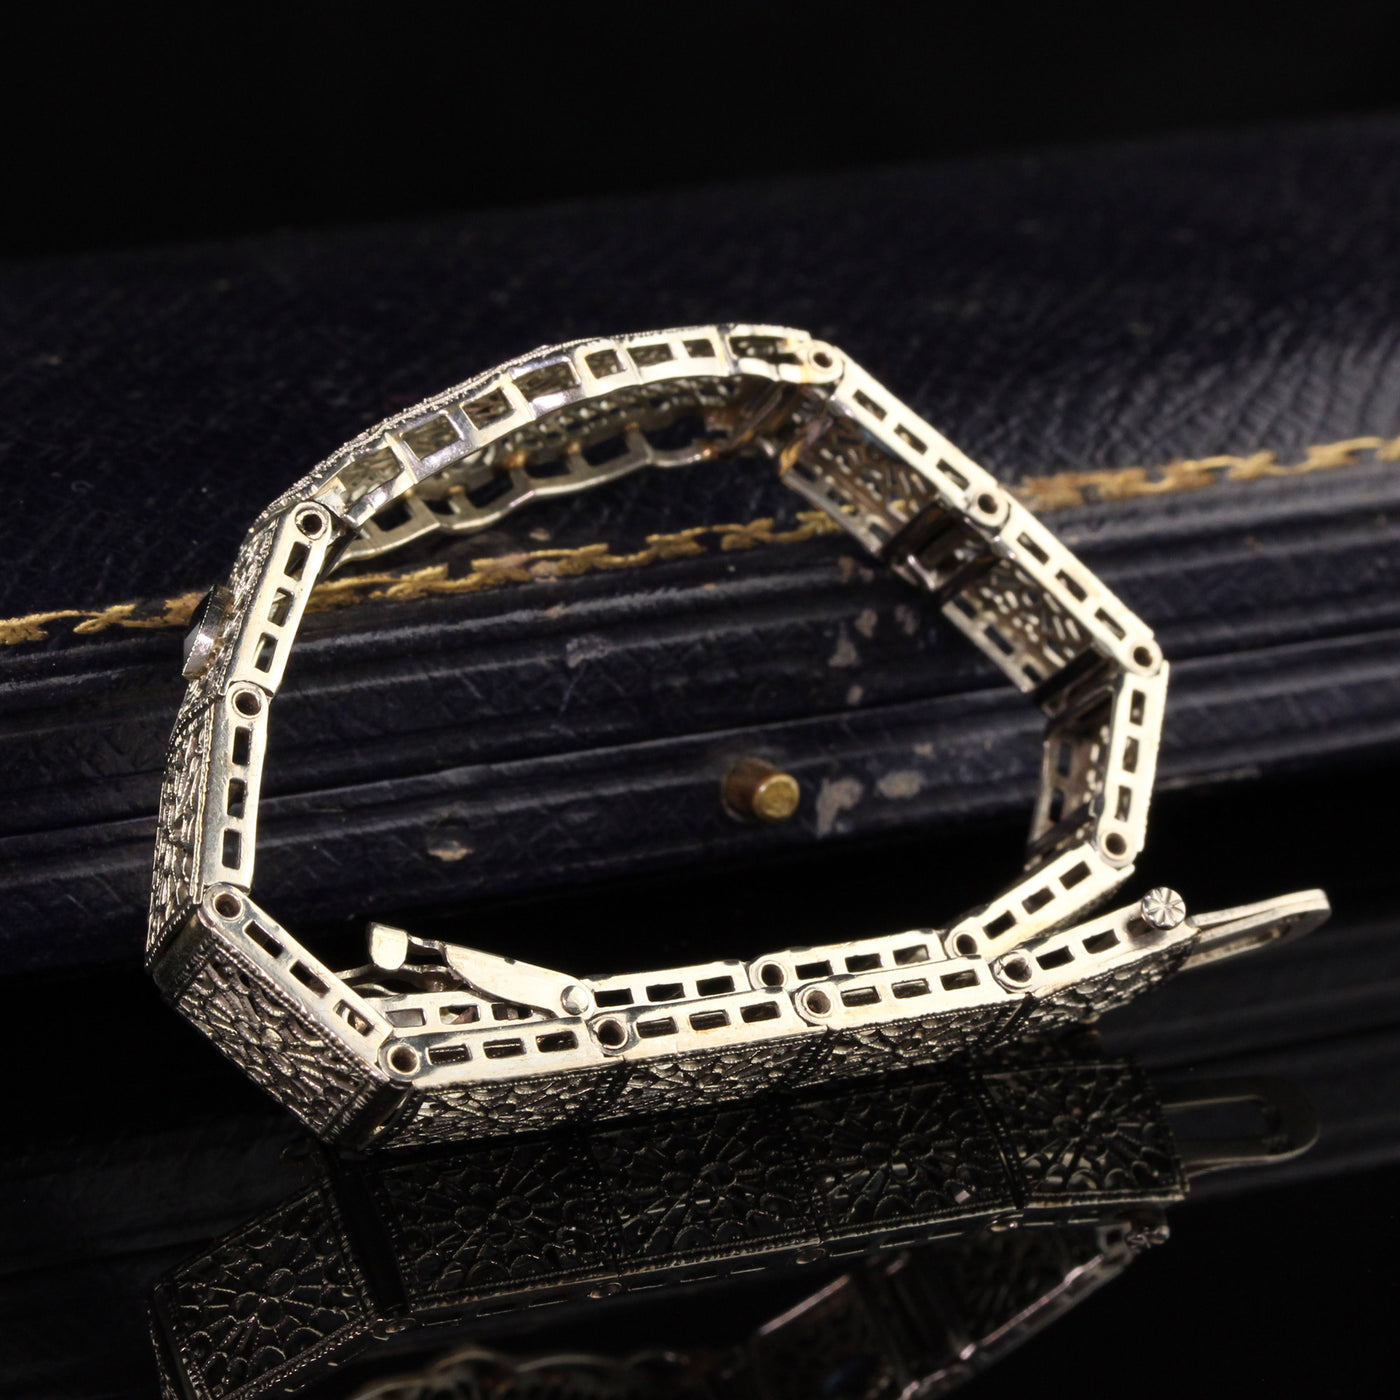 Antique Art Deco 10K White Gold Diamond and Sapphire Filigree Bracelet